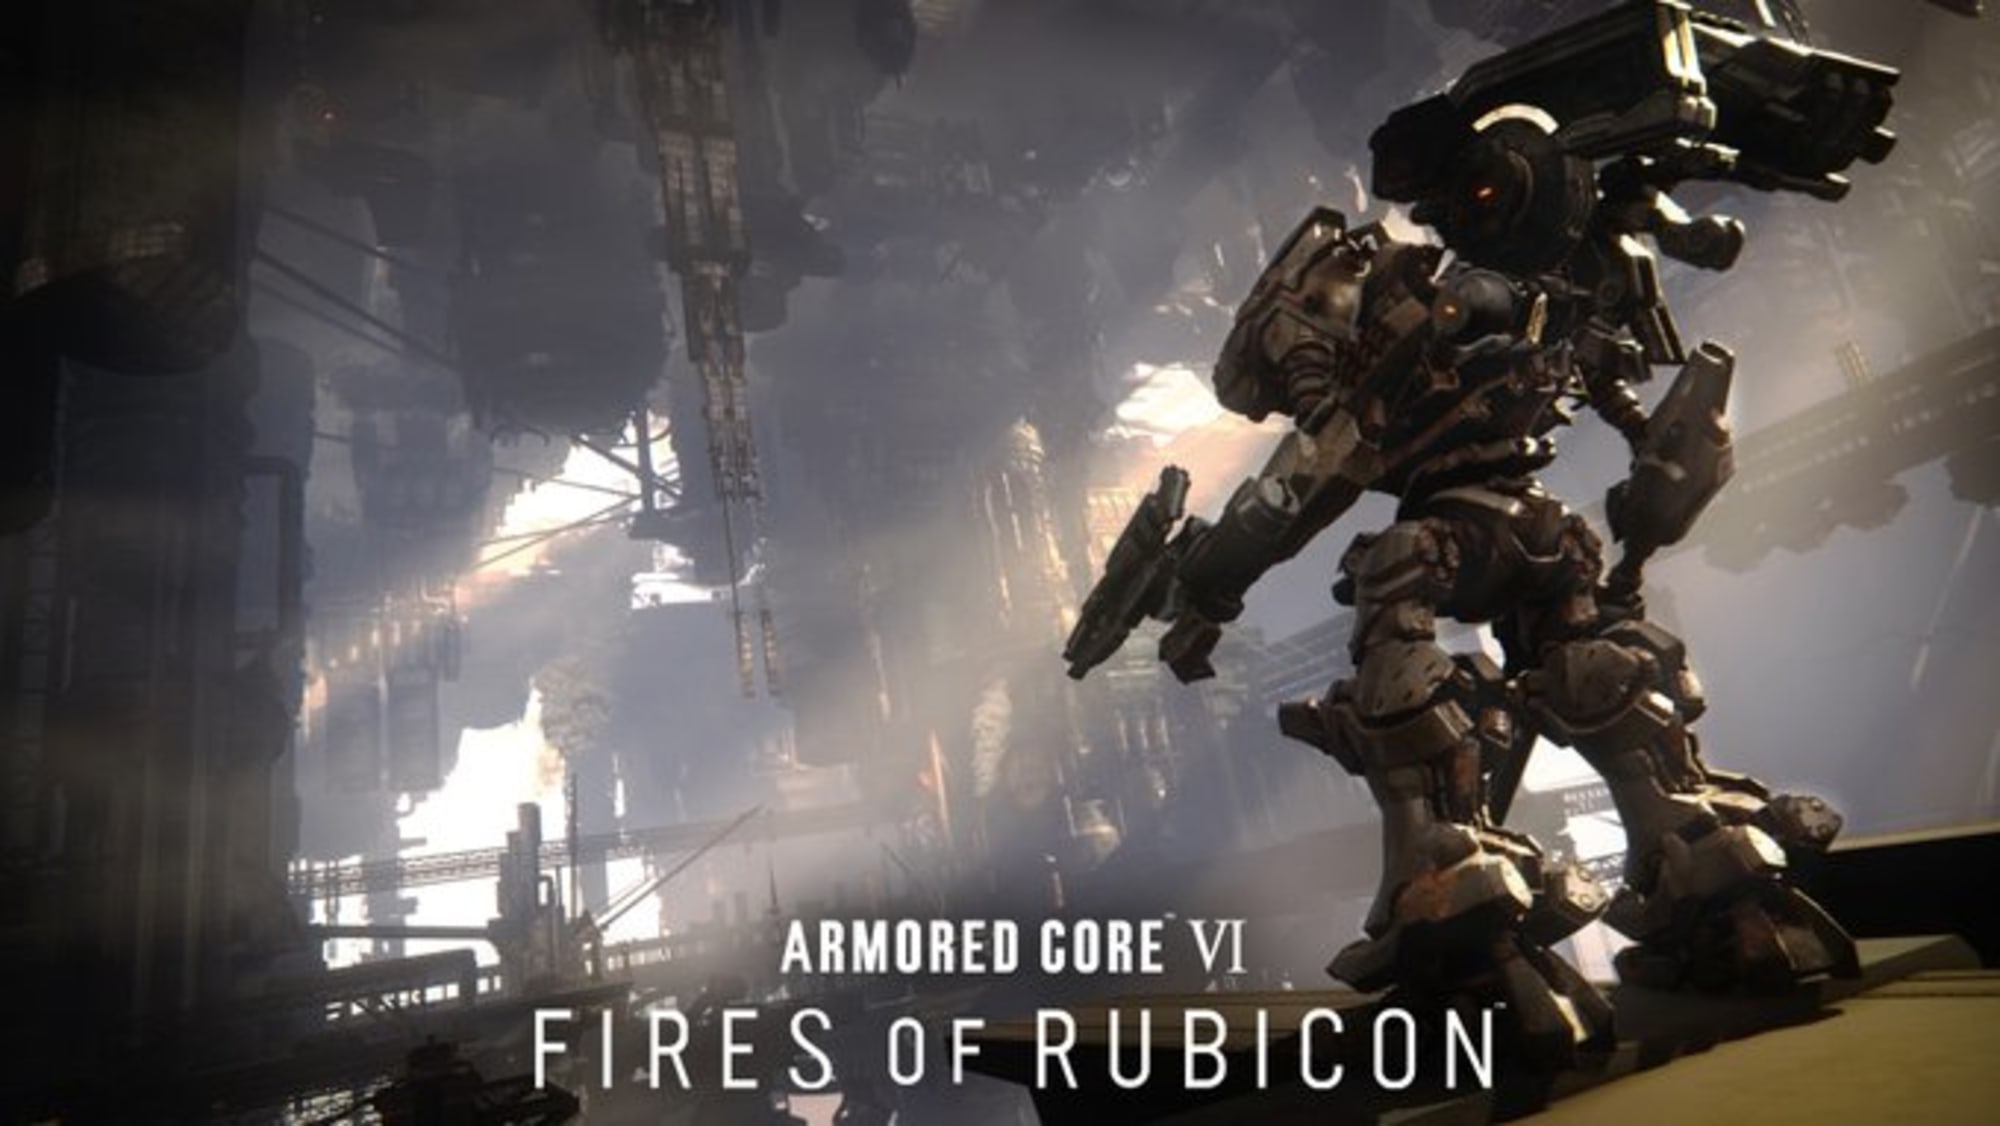 download the last version for windows Armored Core VI: Fires of Rubicon